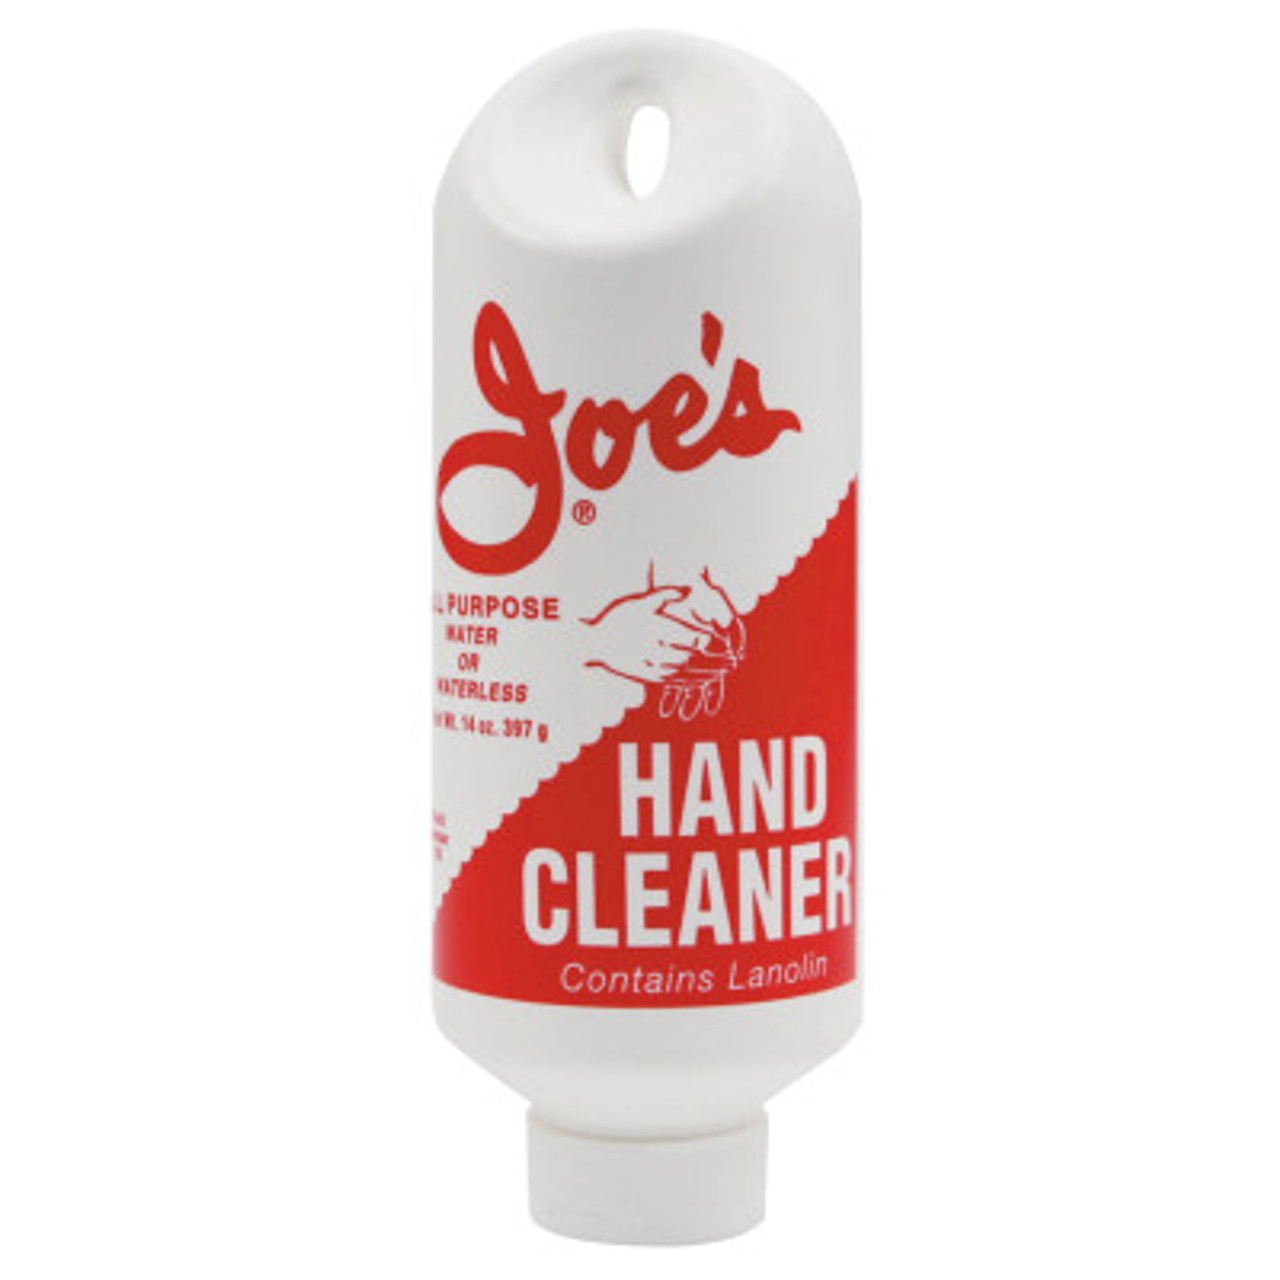 GOJO NATURAL ORANGE Pumice Hand Cleaner, Citrus, 14 oz Bottle, 12